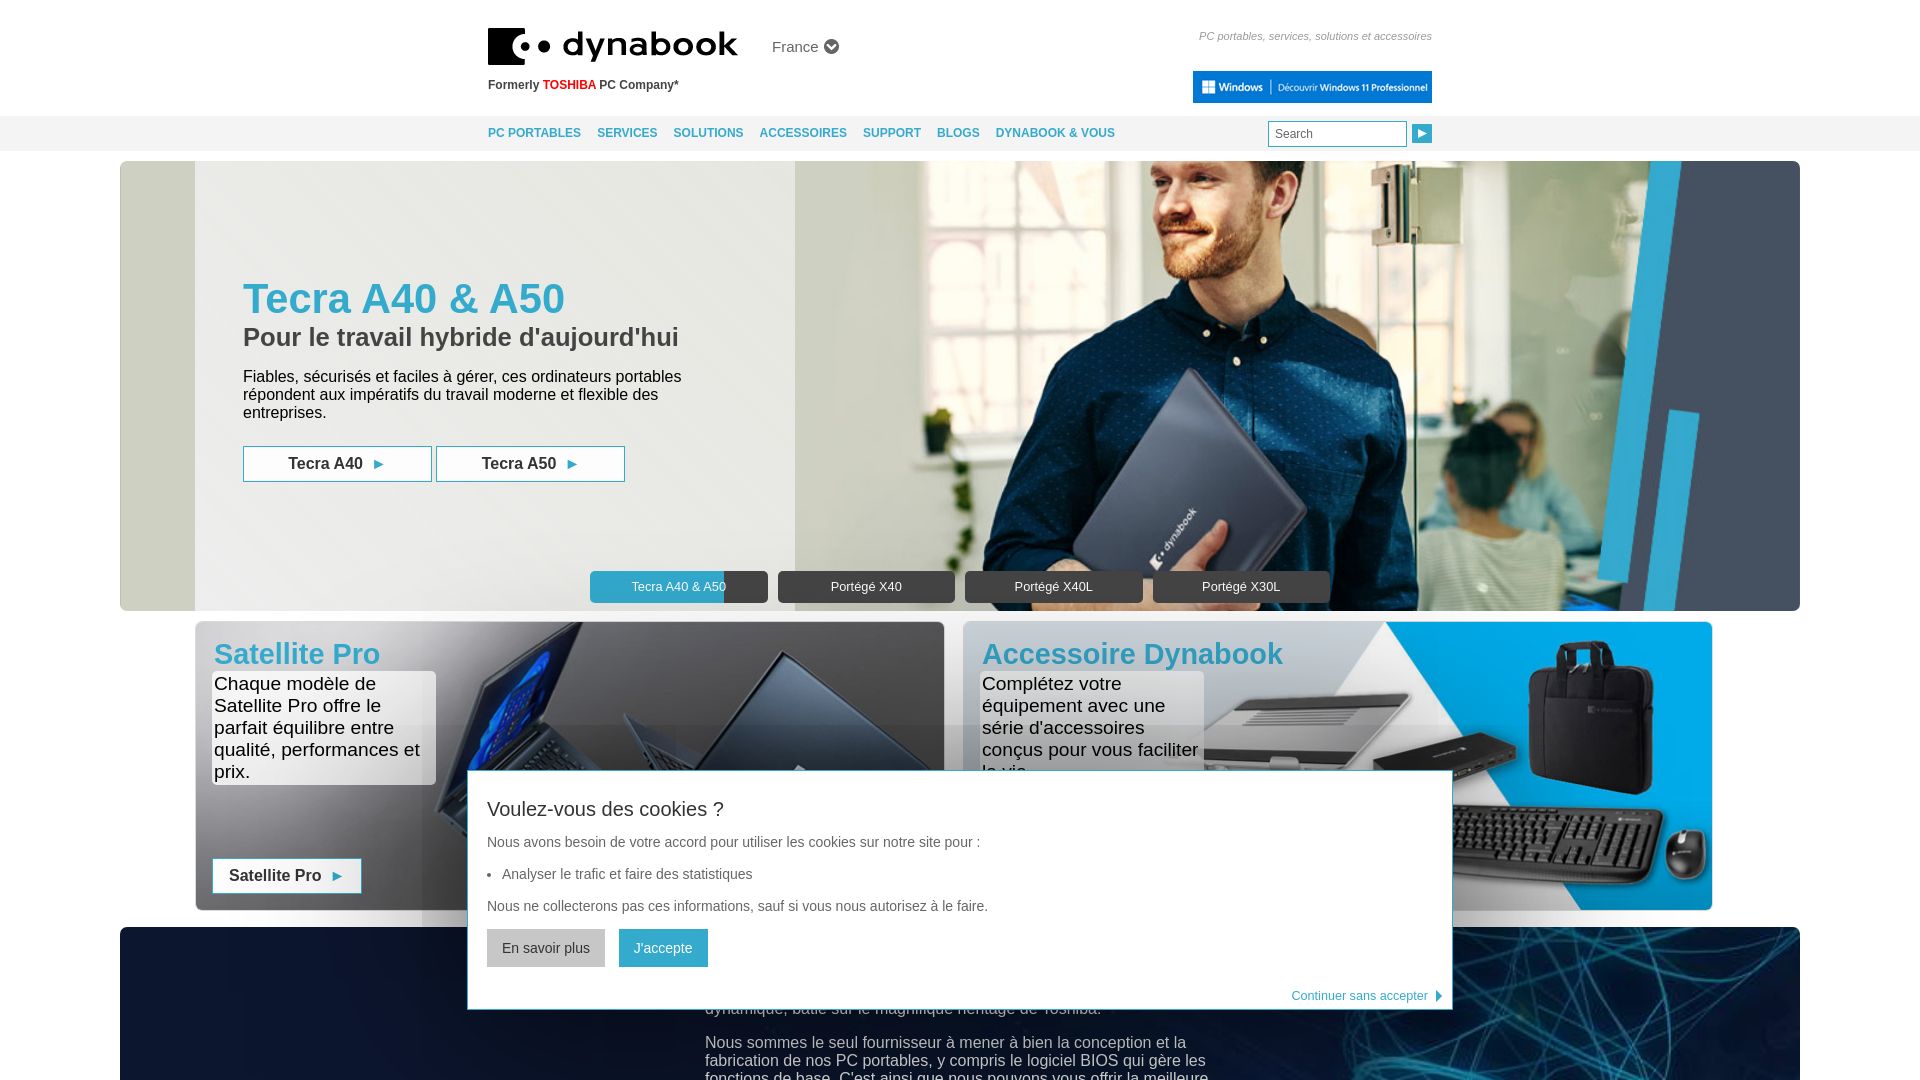 Website status dynabook.com is   ONLINE